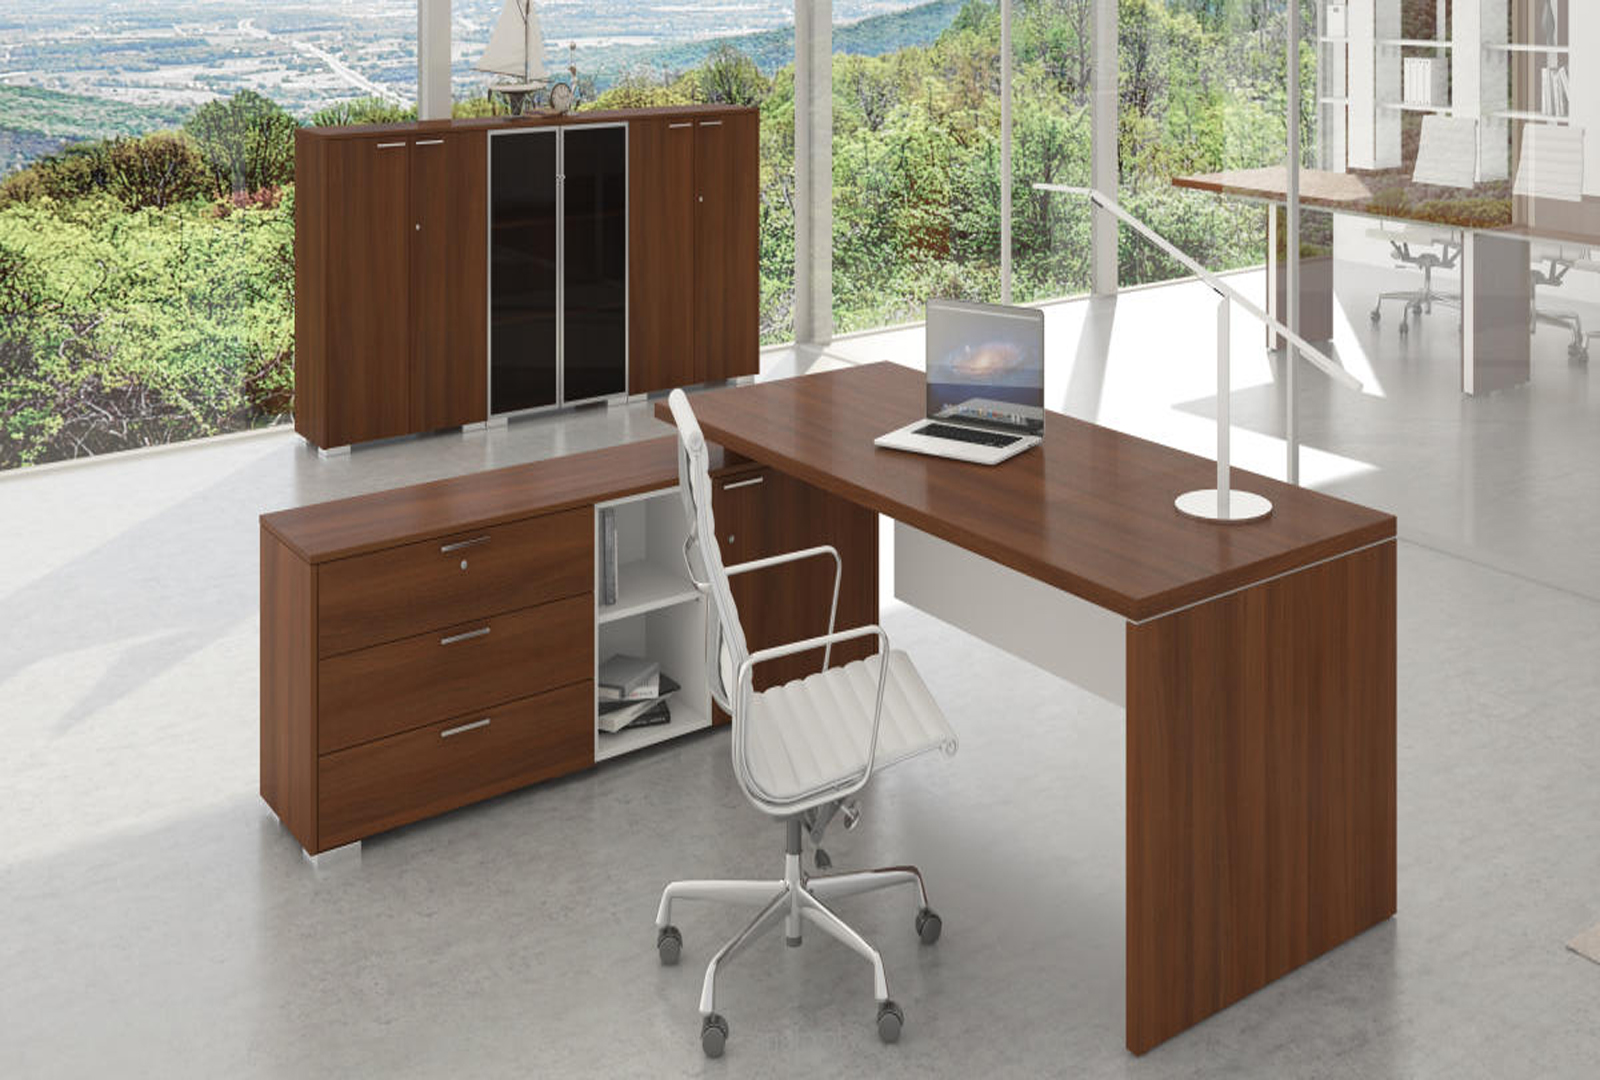 Toris Desks Supported On A Cabinet